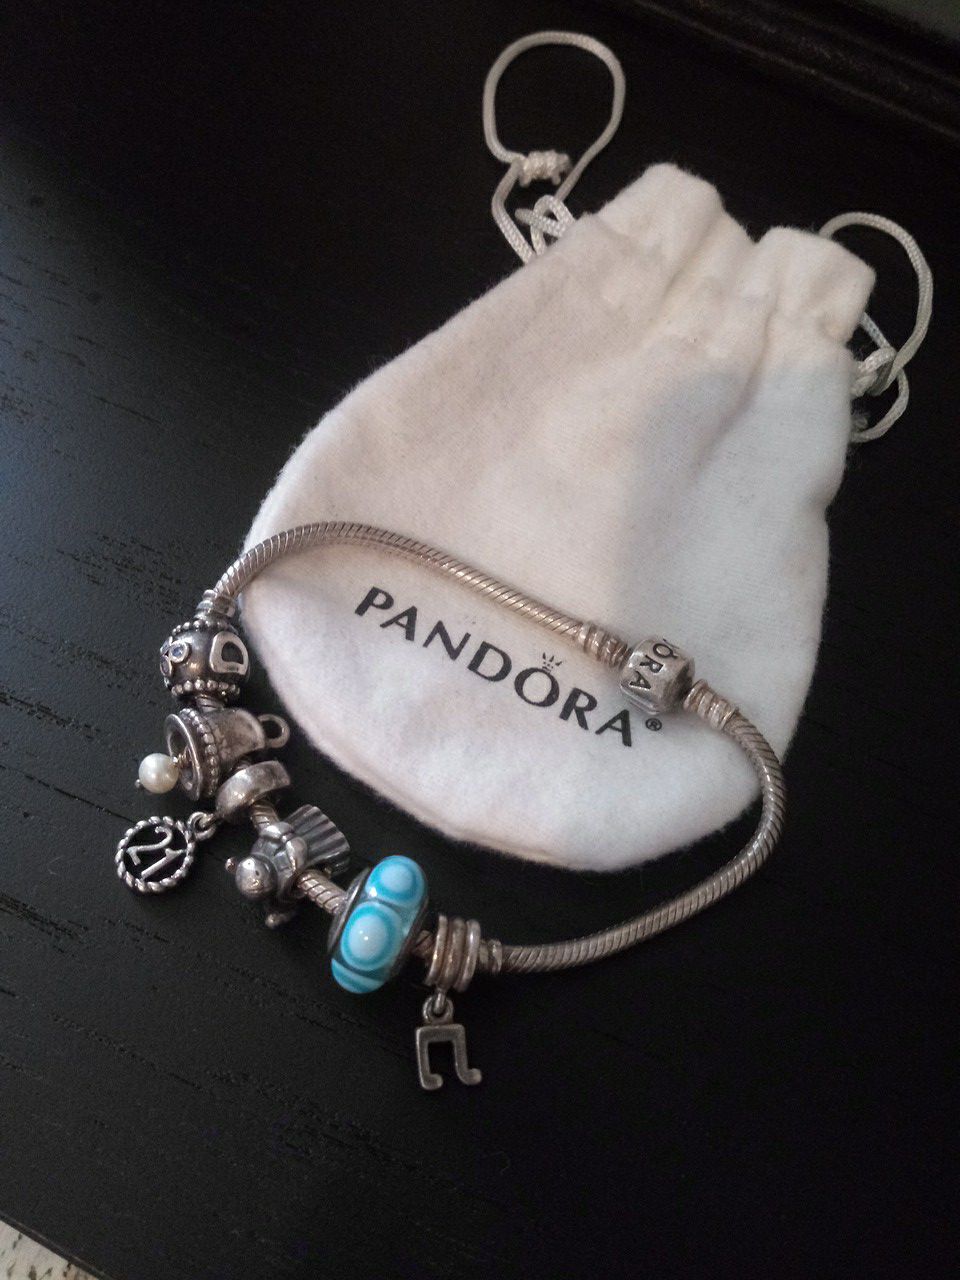 Pandora bracelet with 6 charms